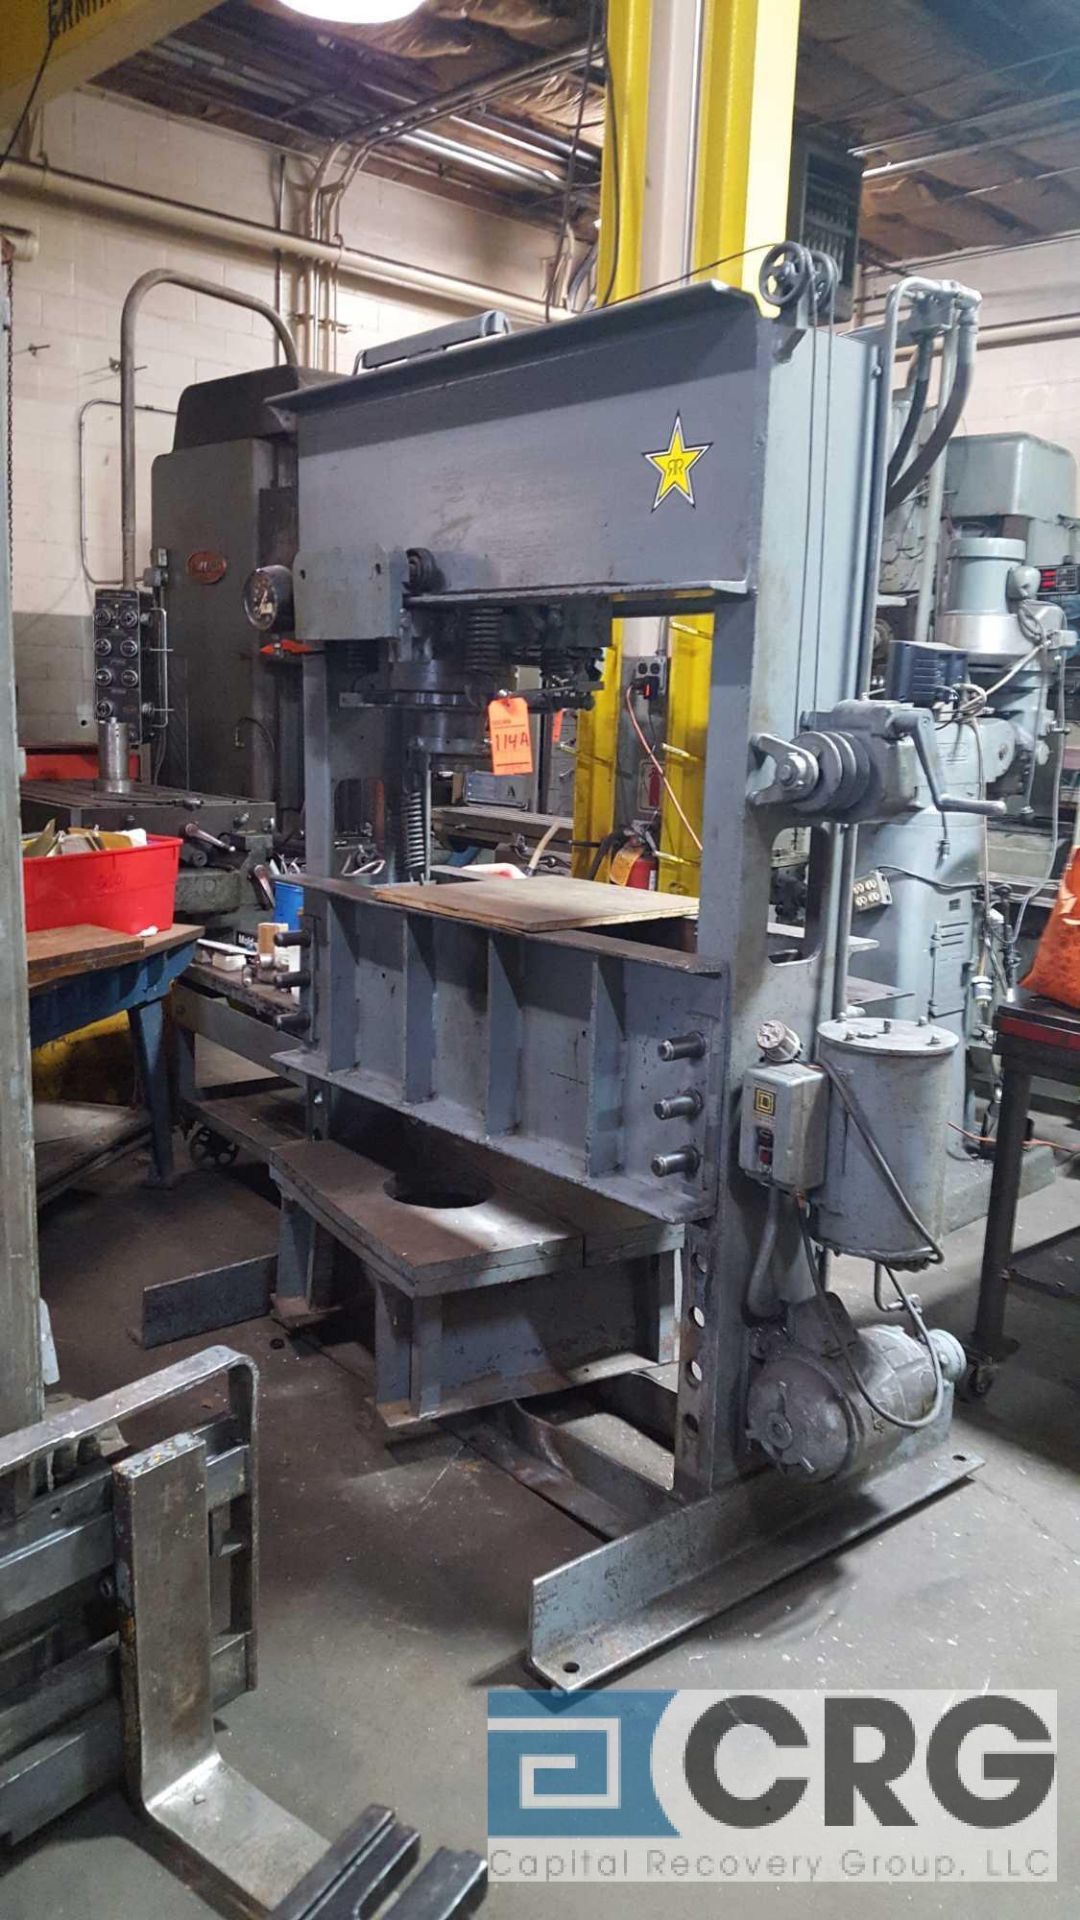 Acco hydraulic press, model P-1358, serial no 8536, catalog no MHP-150, 150 ton capacity.